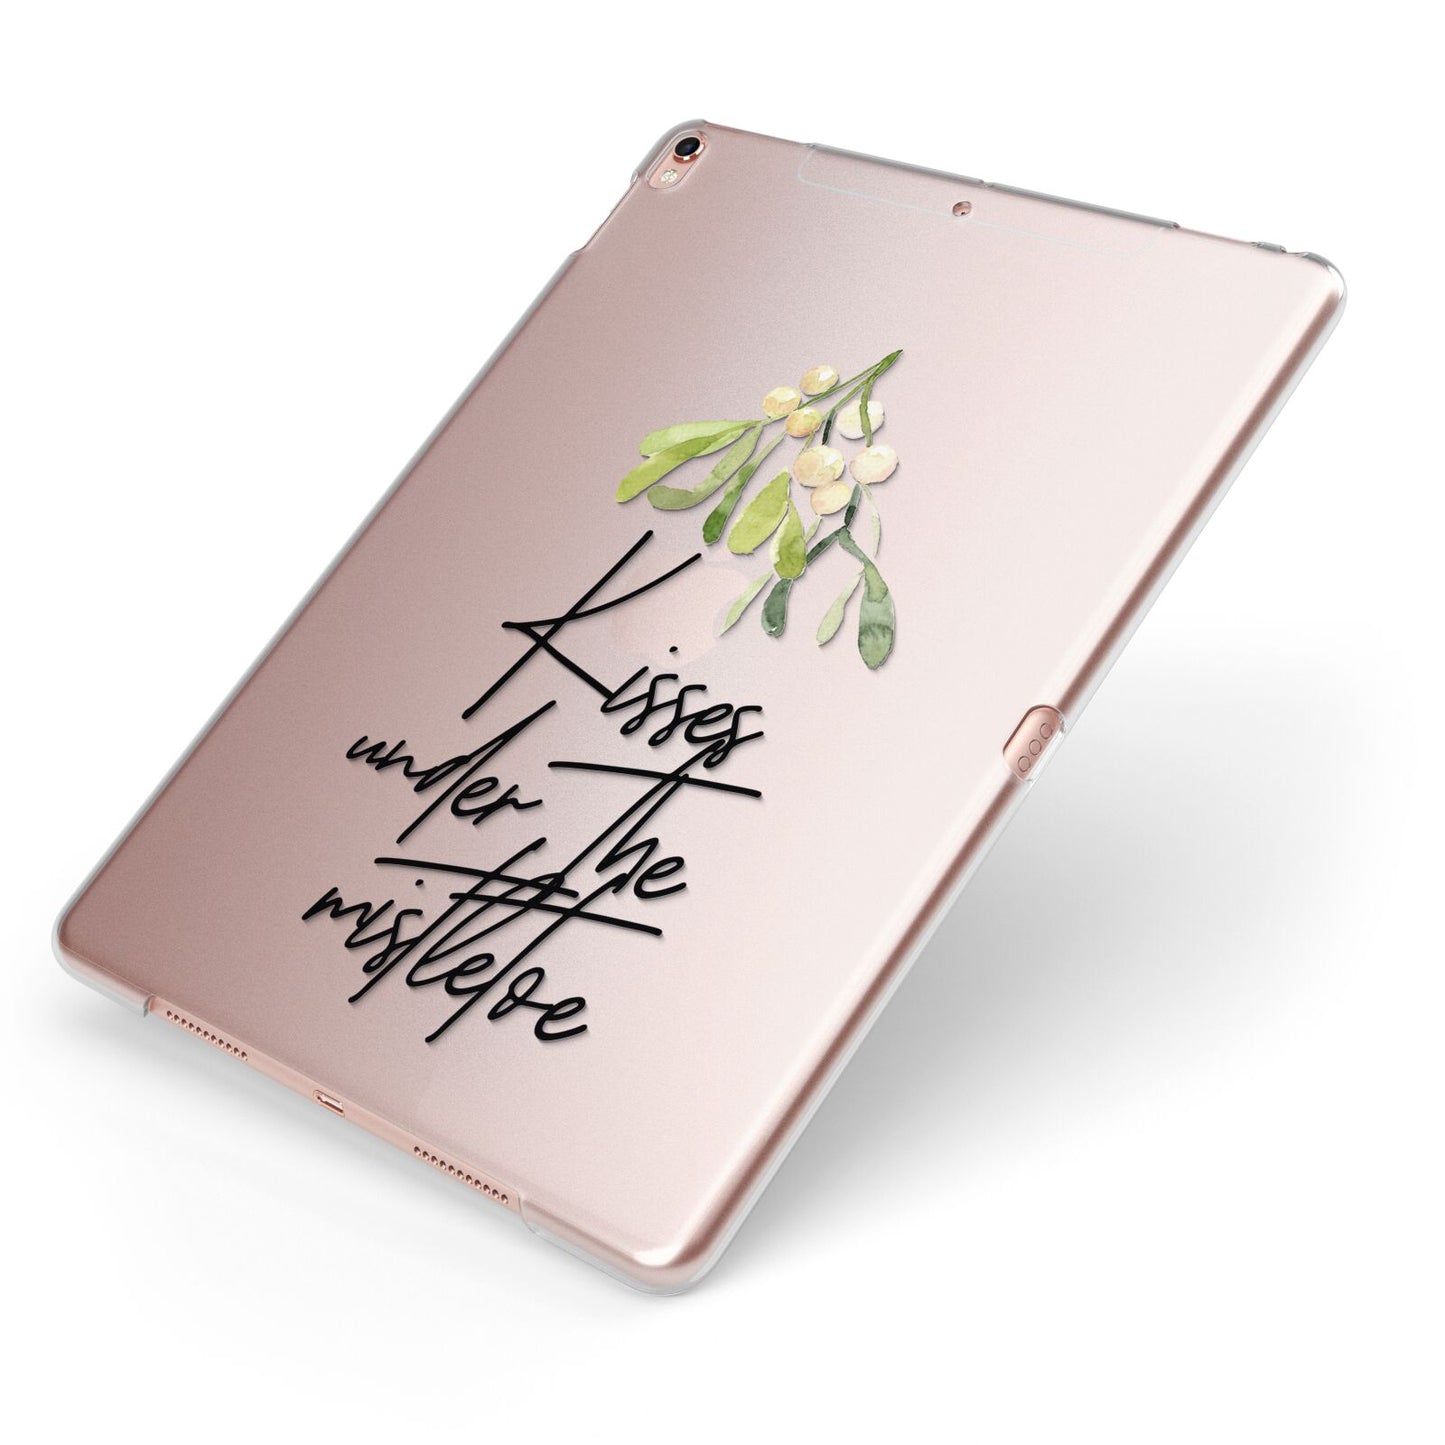 Kisses Under The Mistletoe Apple iPad Case on Rose Gold iPad Side View